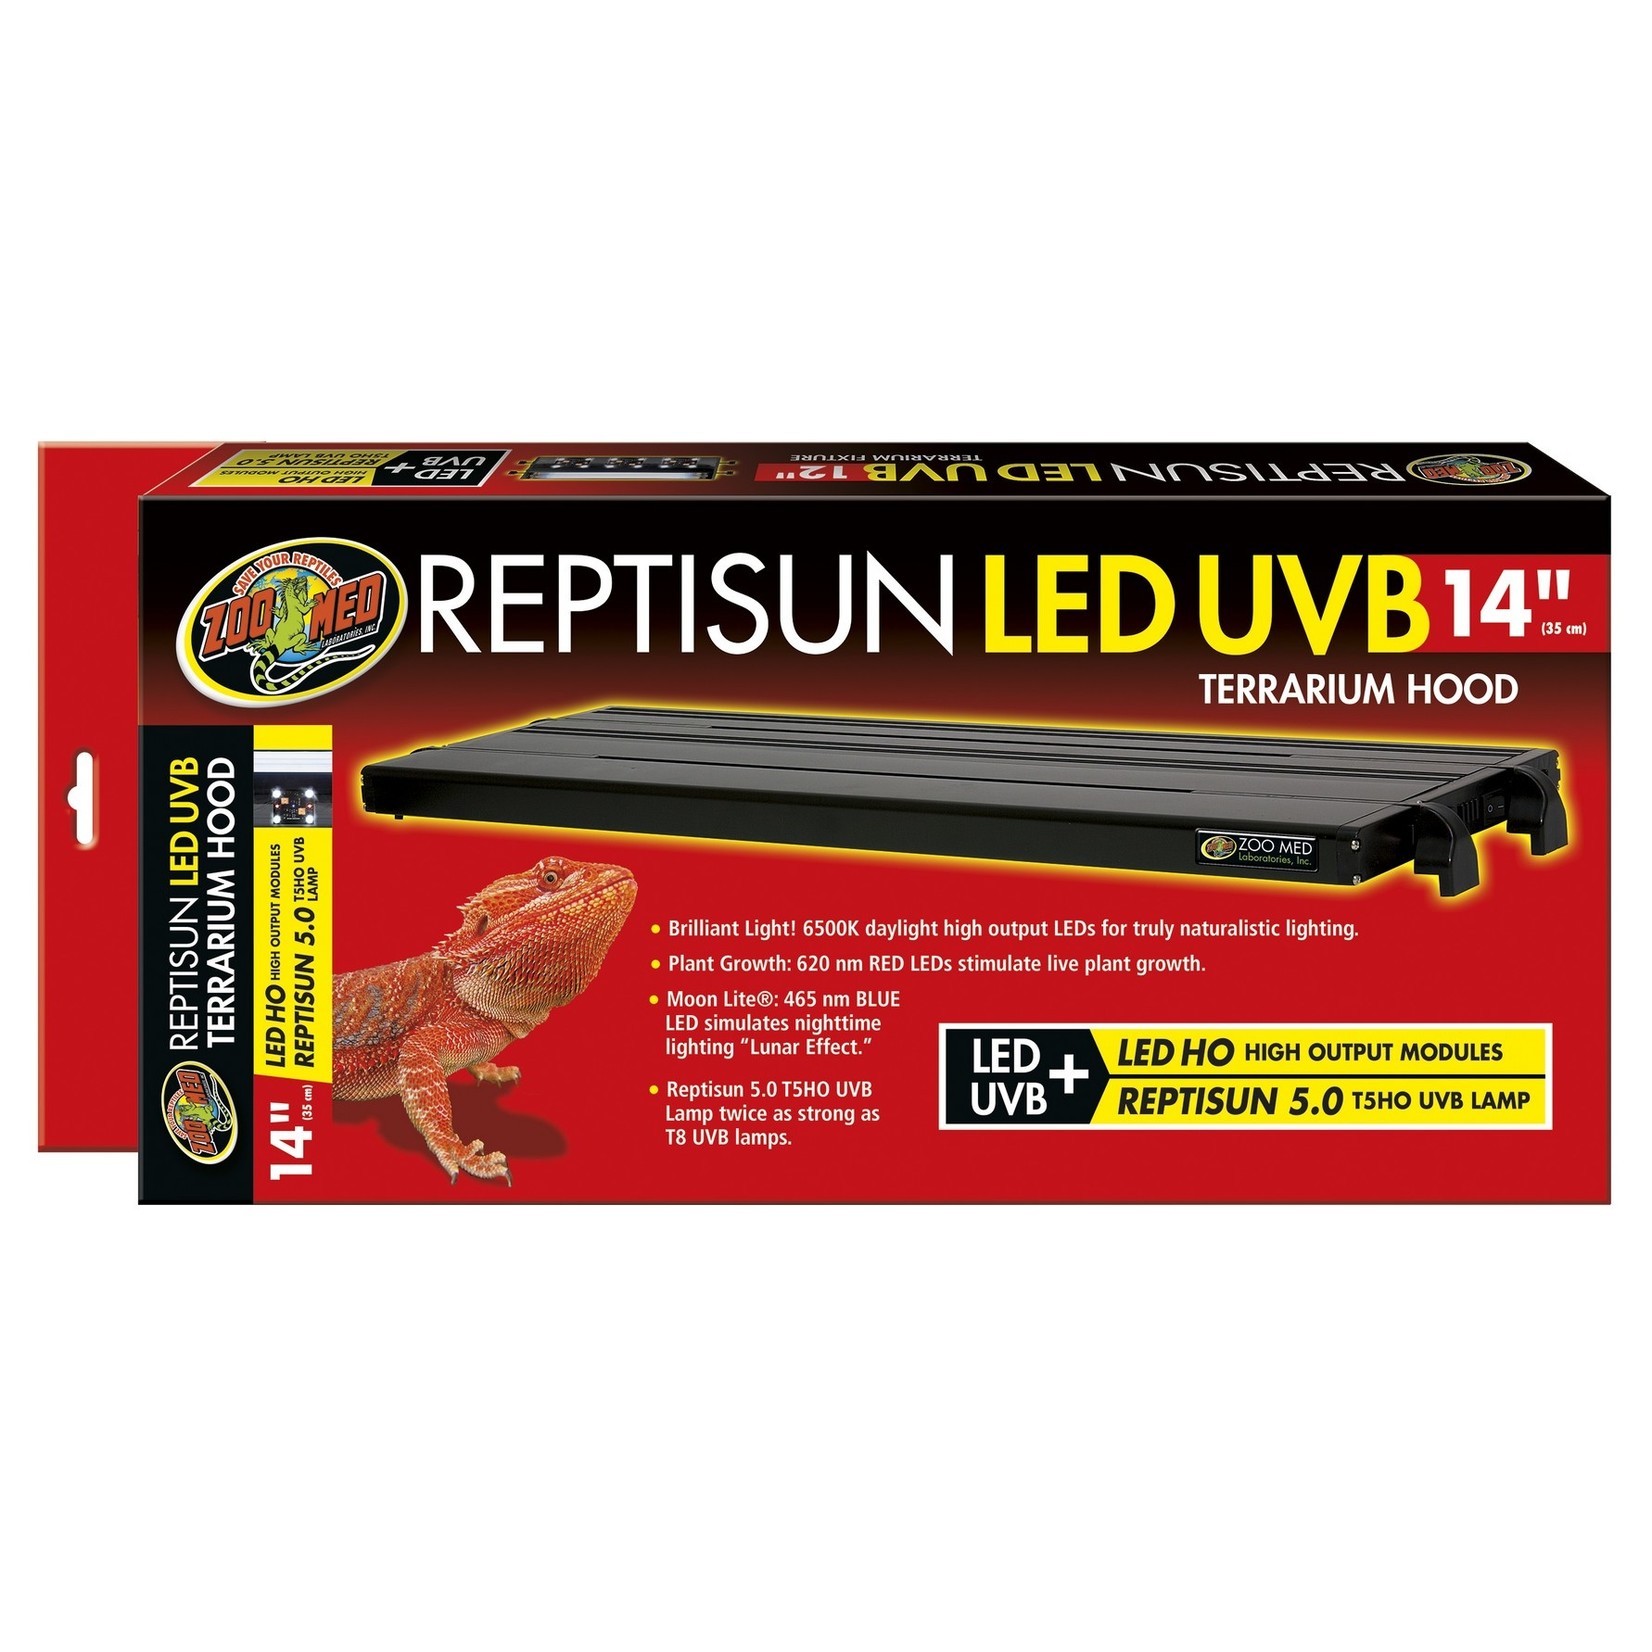 (W) Zoo Med ReptiSun LED UVB Terrarium Hood - 15.5" to 21.5"